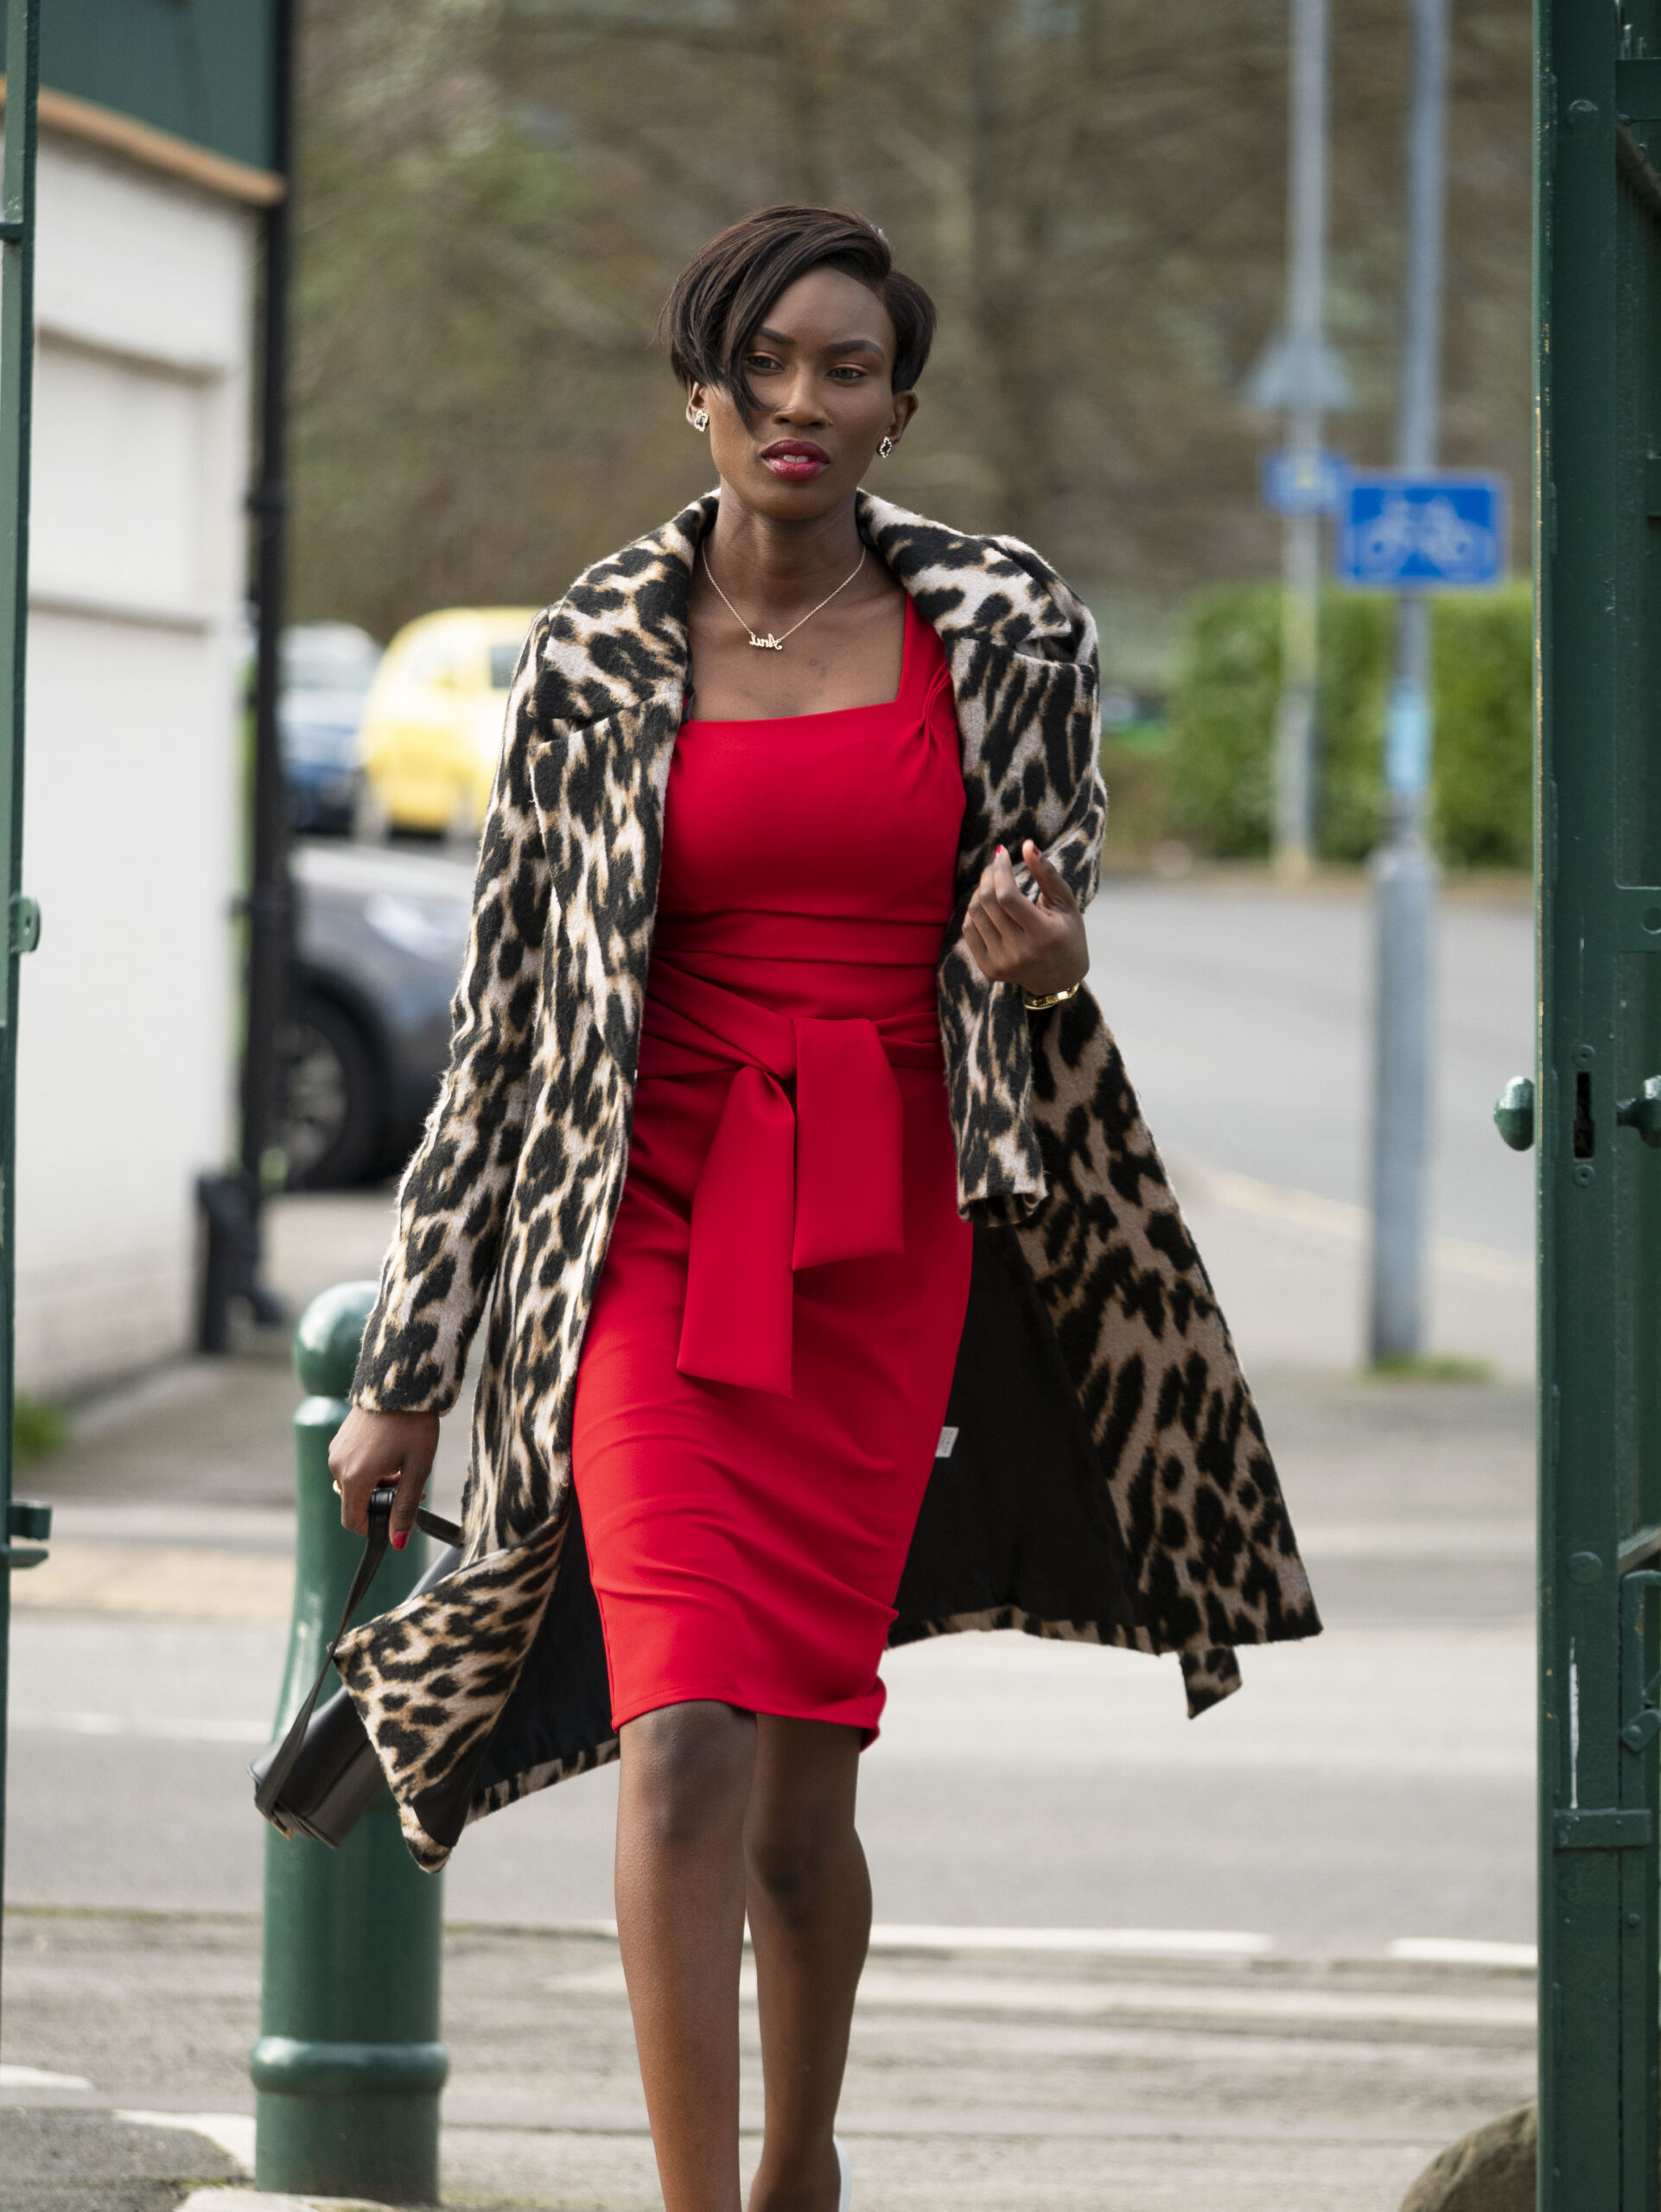 Red dress & Leopard coat